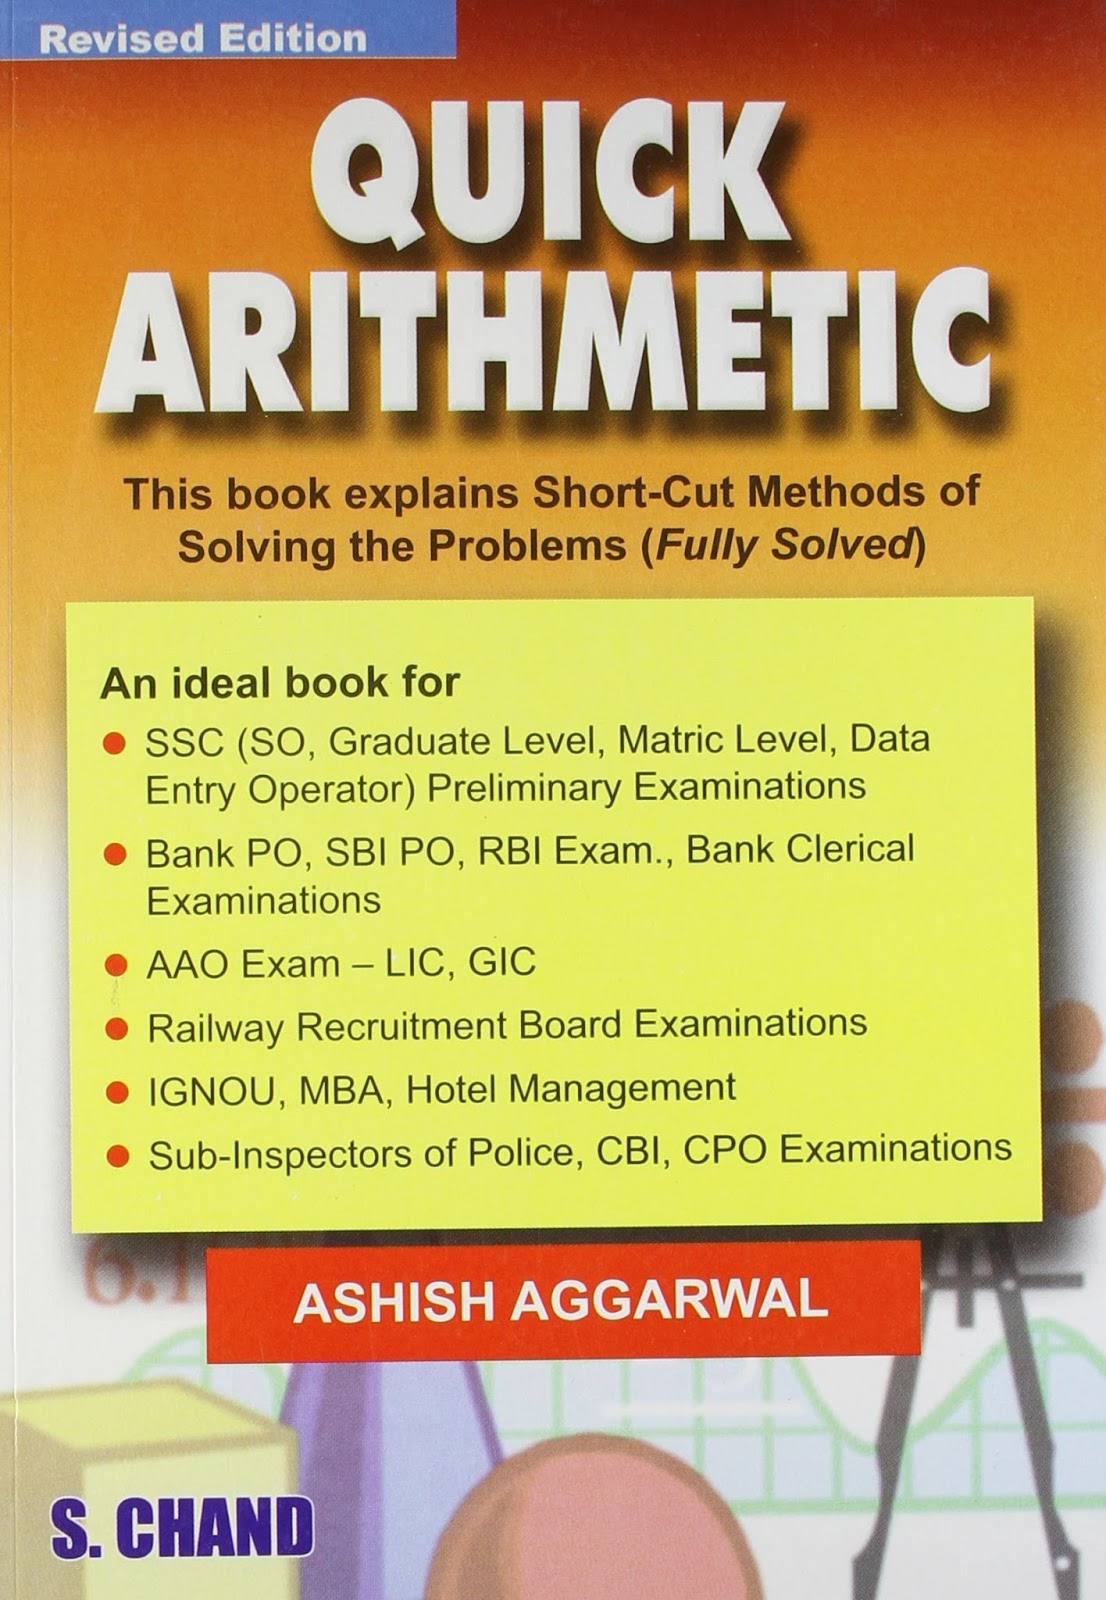 rs-aggarwal-quantitative-aptitude-book-pdf-free-download-2015-scribd-india